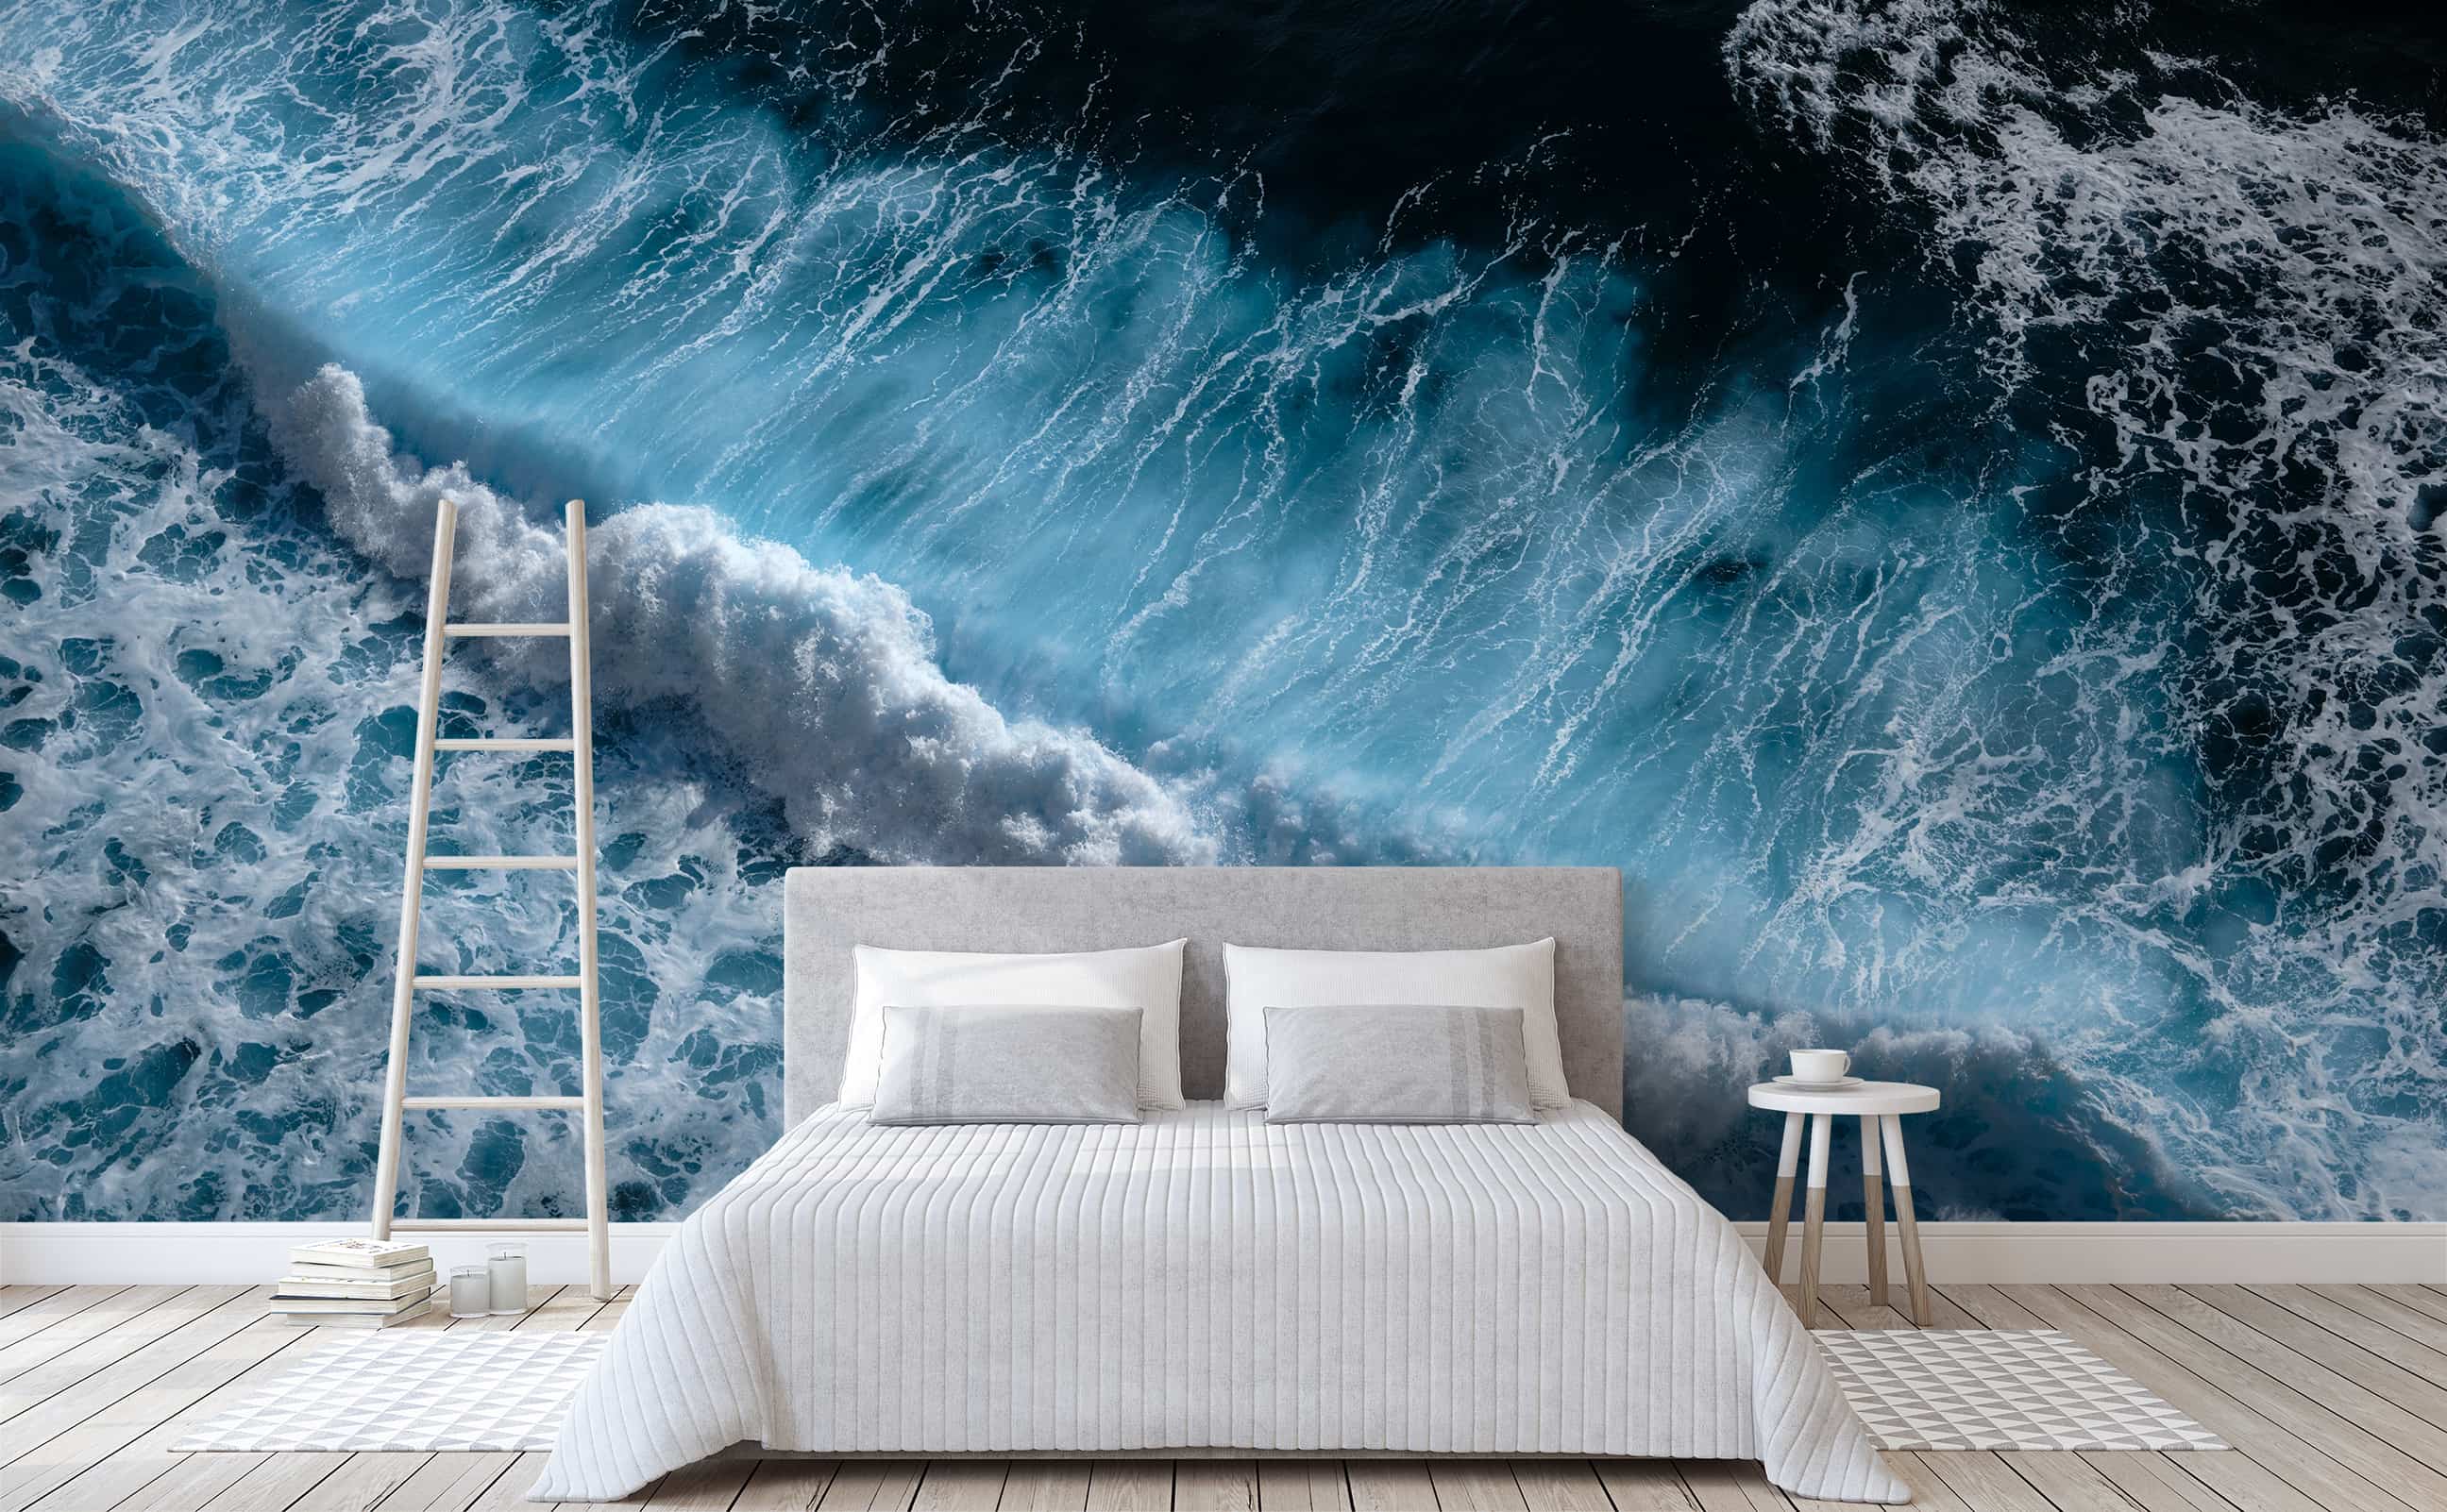 Ocean Wall Murals  Sea Themed Designs  Hovia